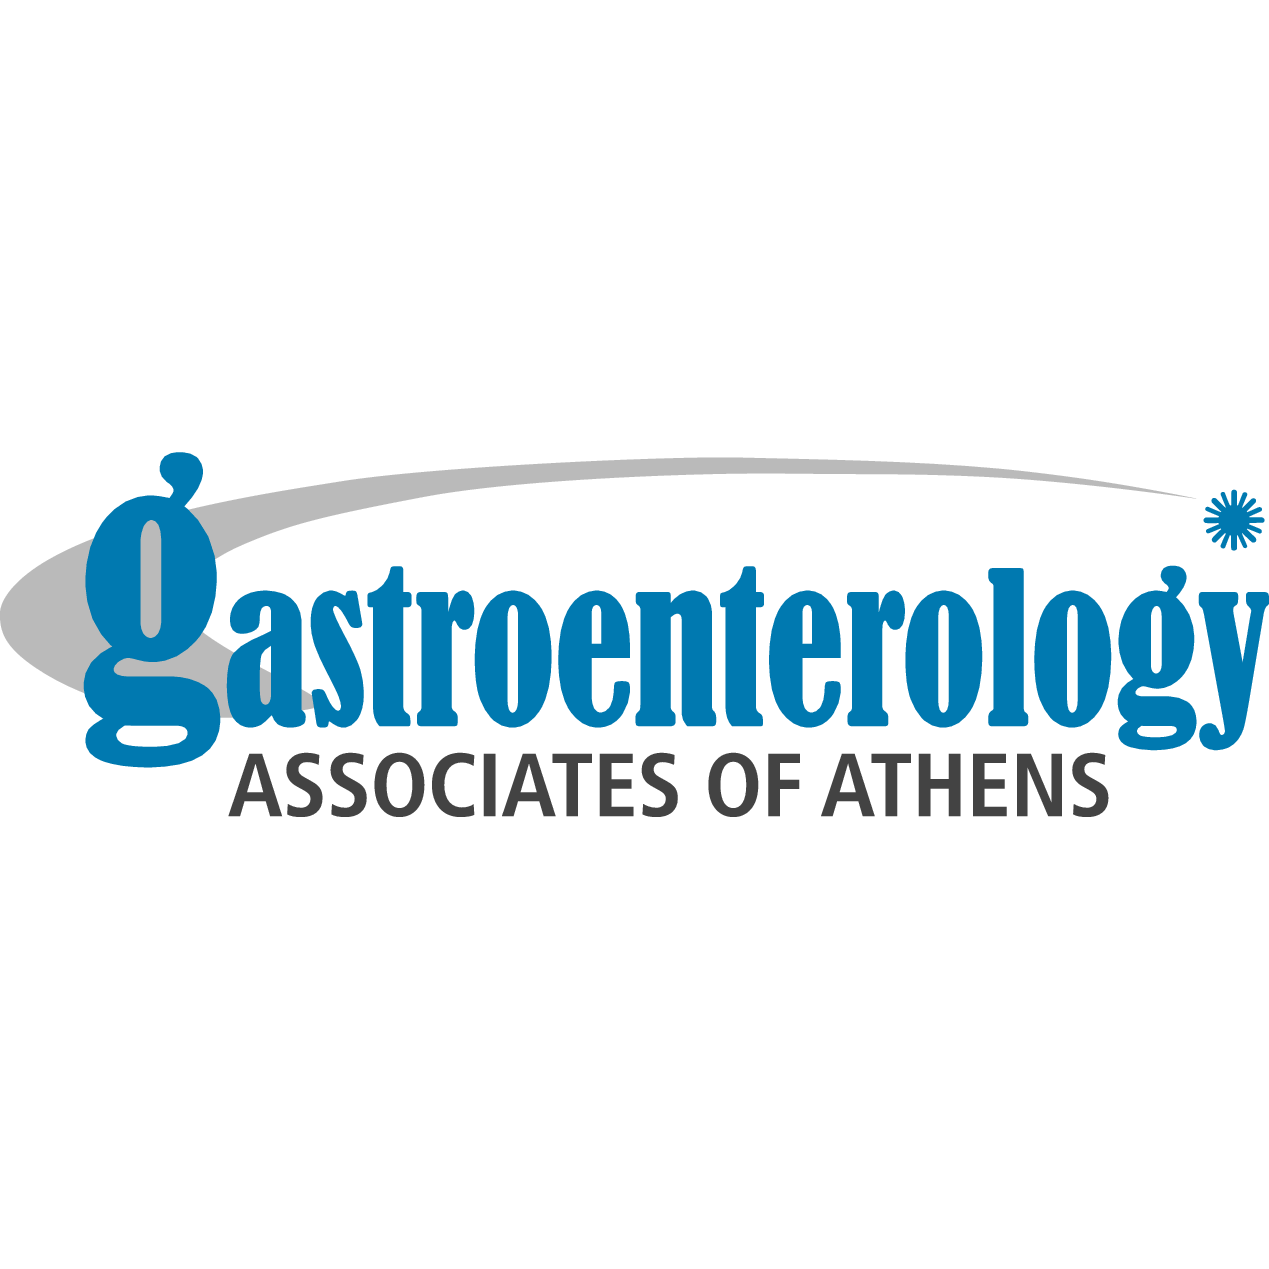 Gastroenterology Associates of Athens Logo